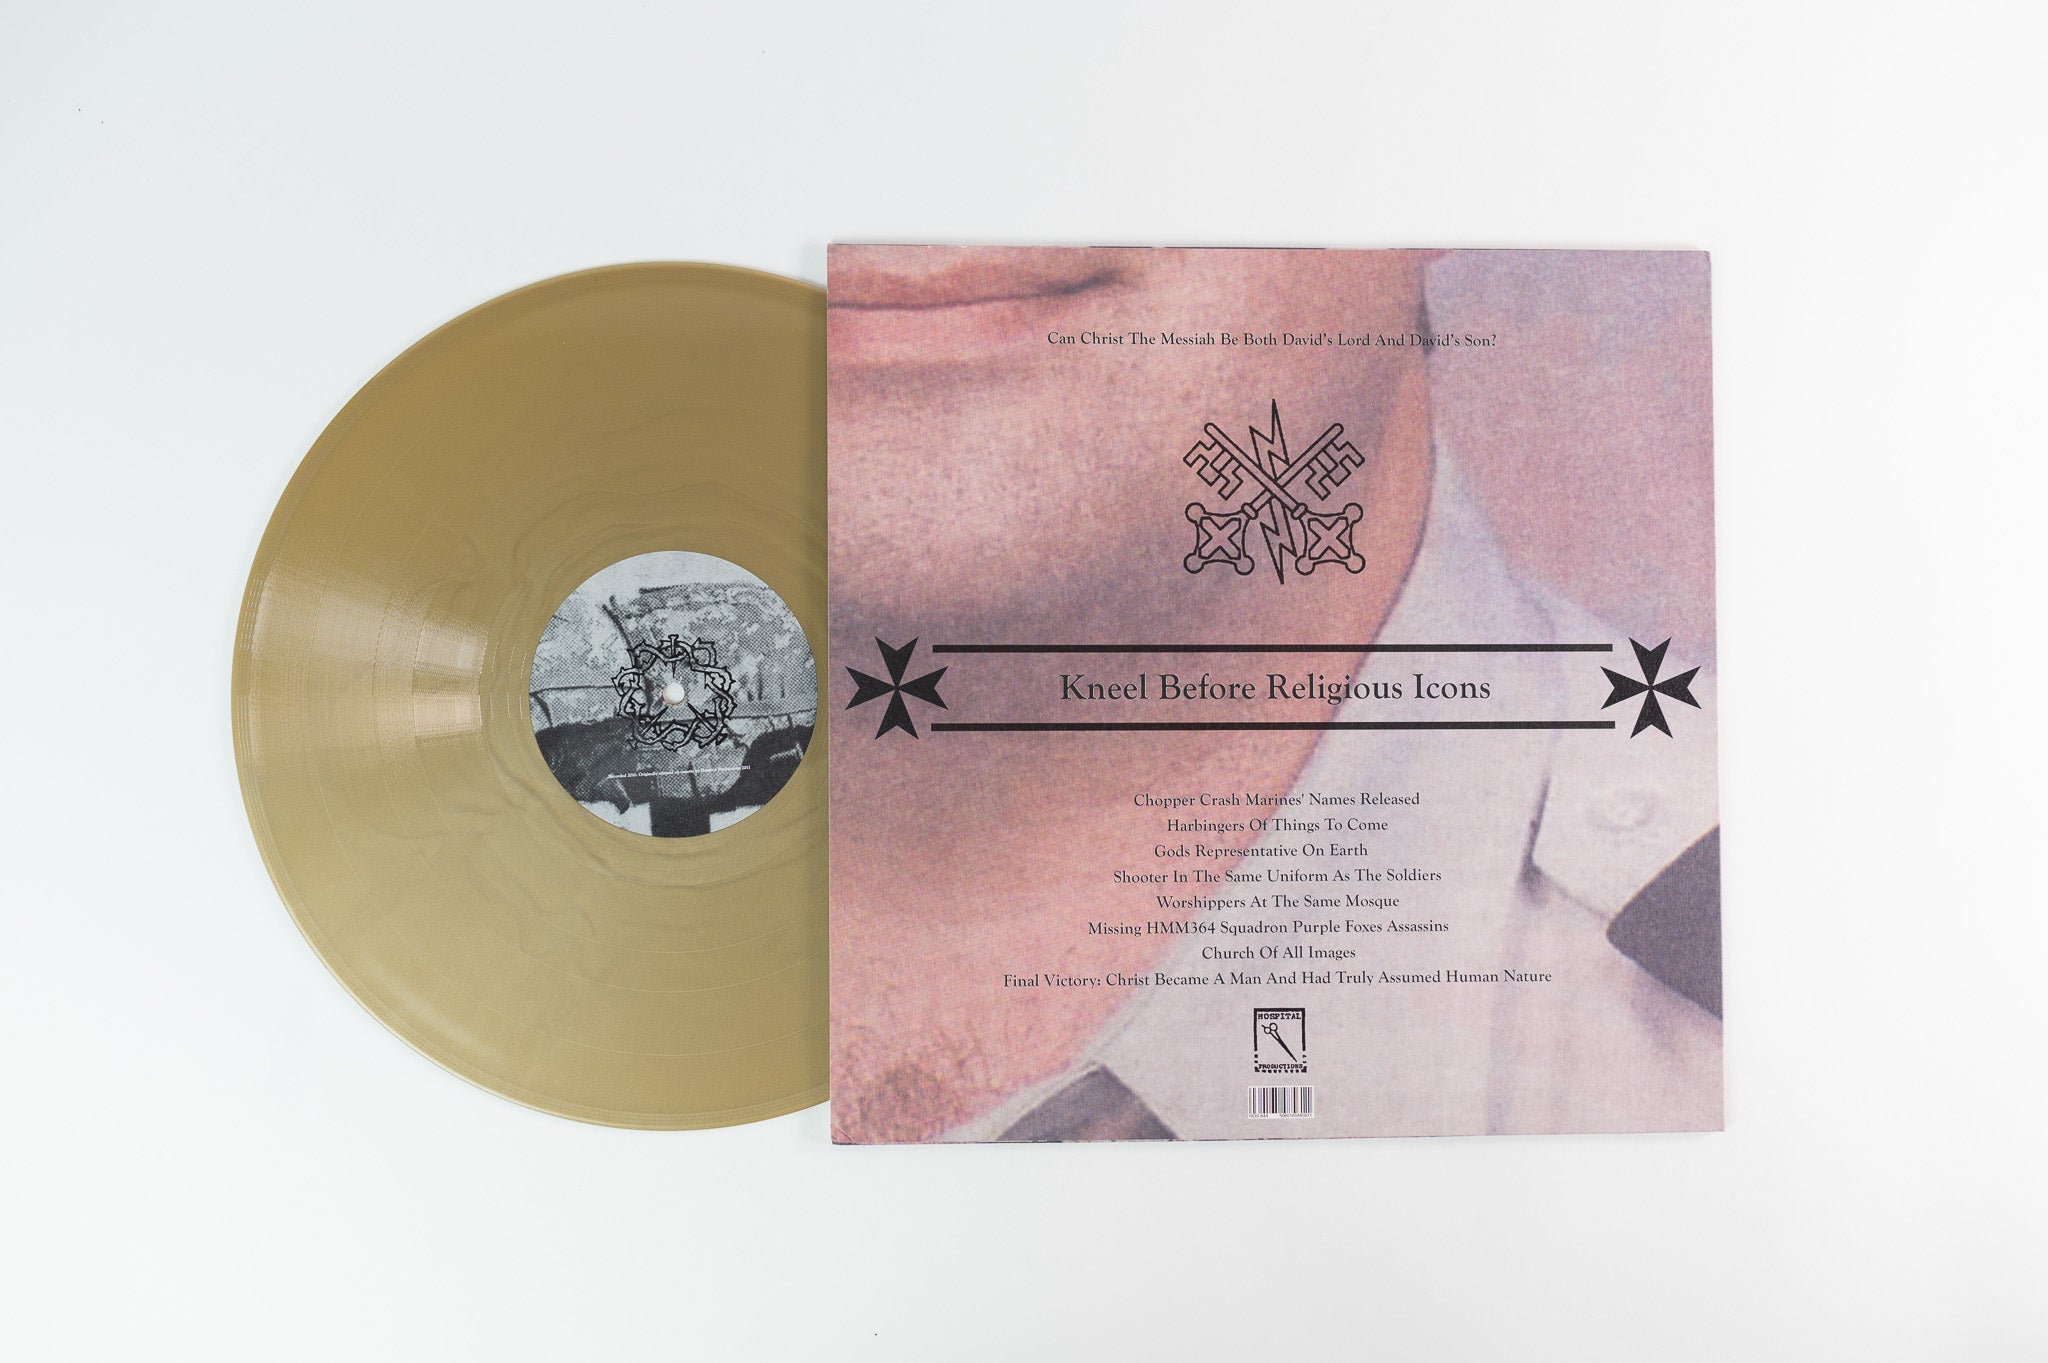 Vatican Shadow - Kneel Before Religious Icons on Hospital Ltd Gold Vinyl Reissue